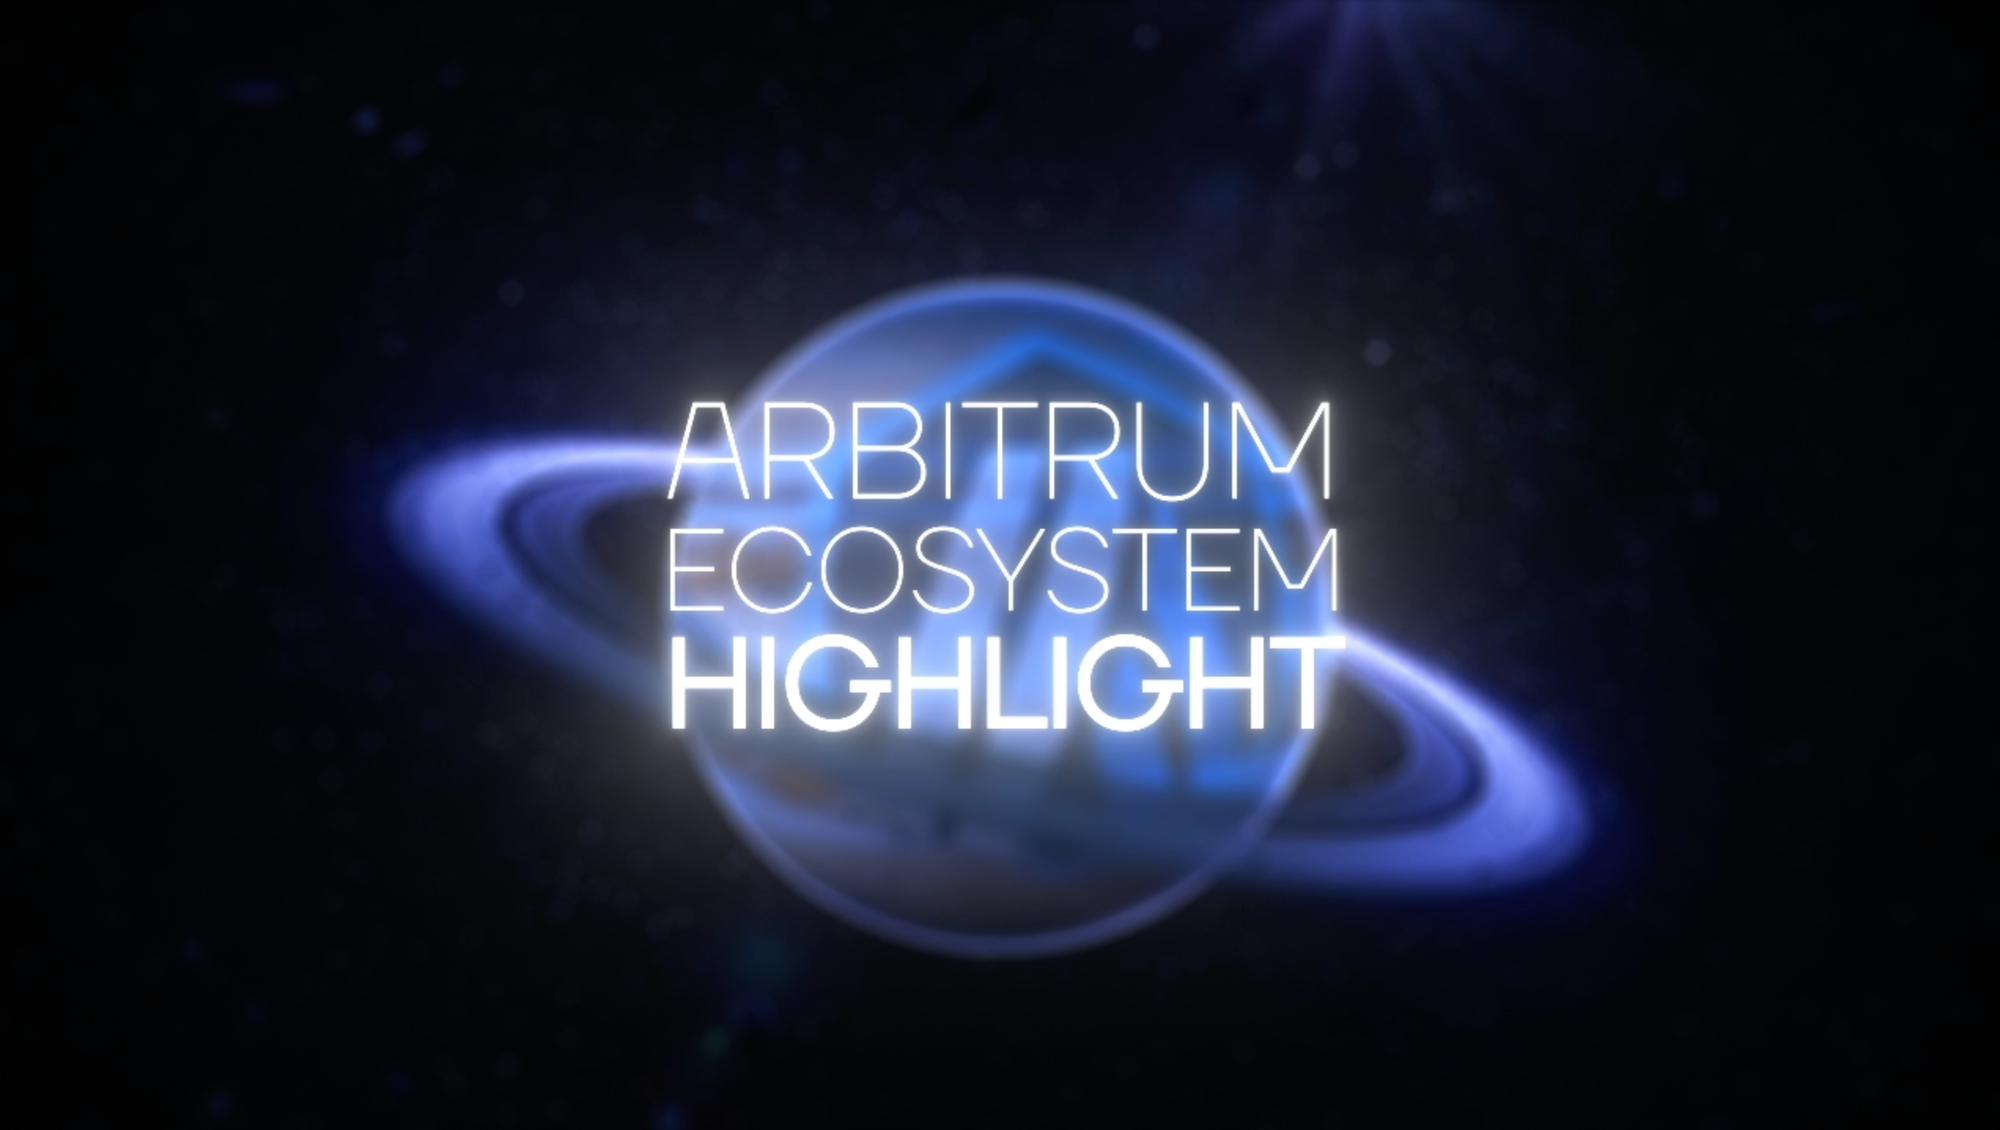 Arbitrum Ecosystem Highlight